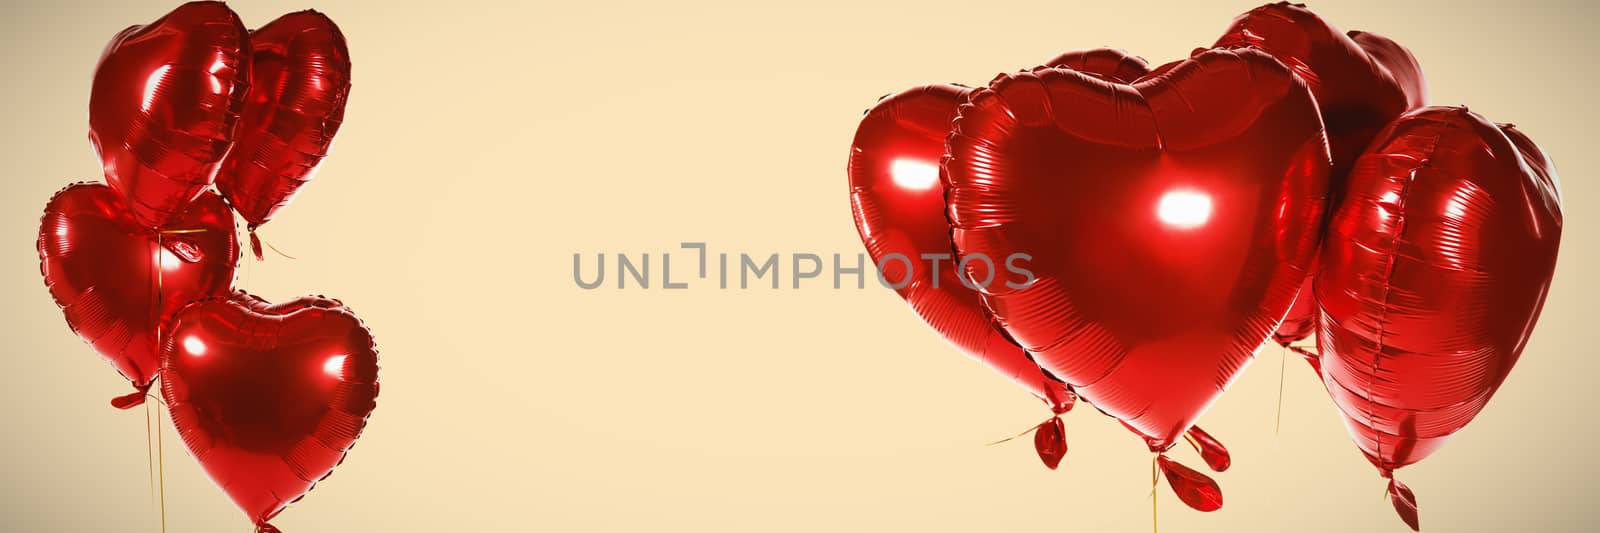 Red heart shape balloons against orange background